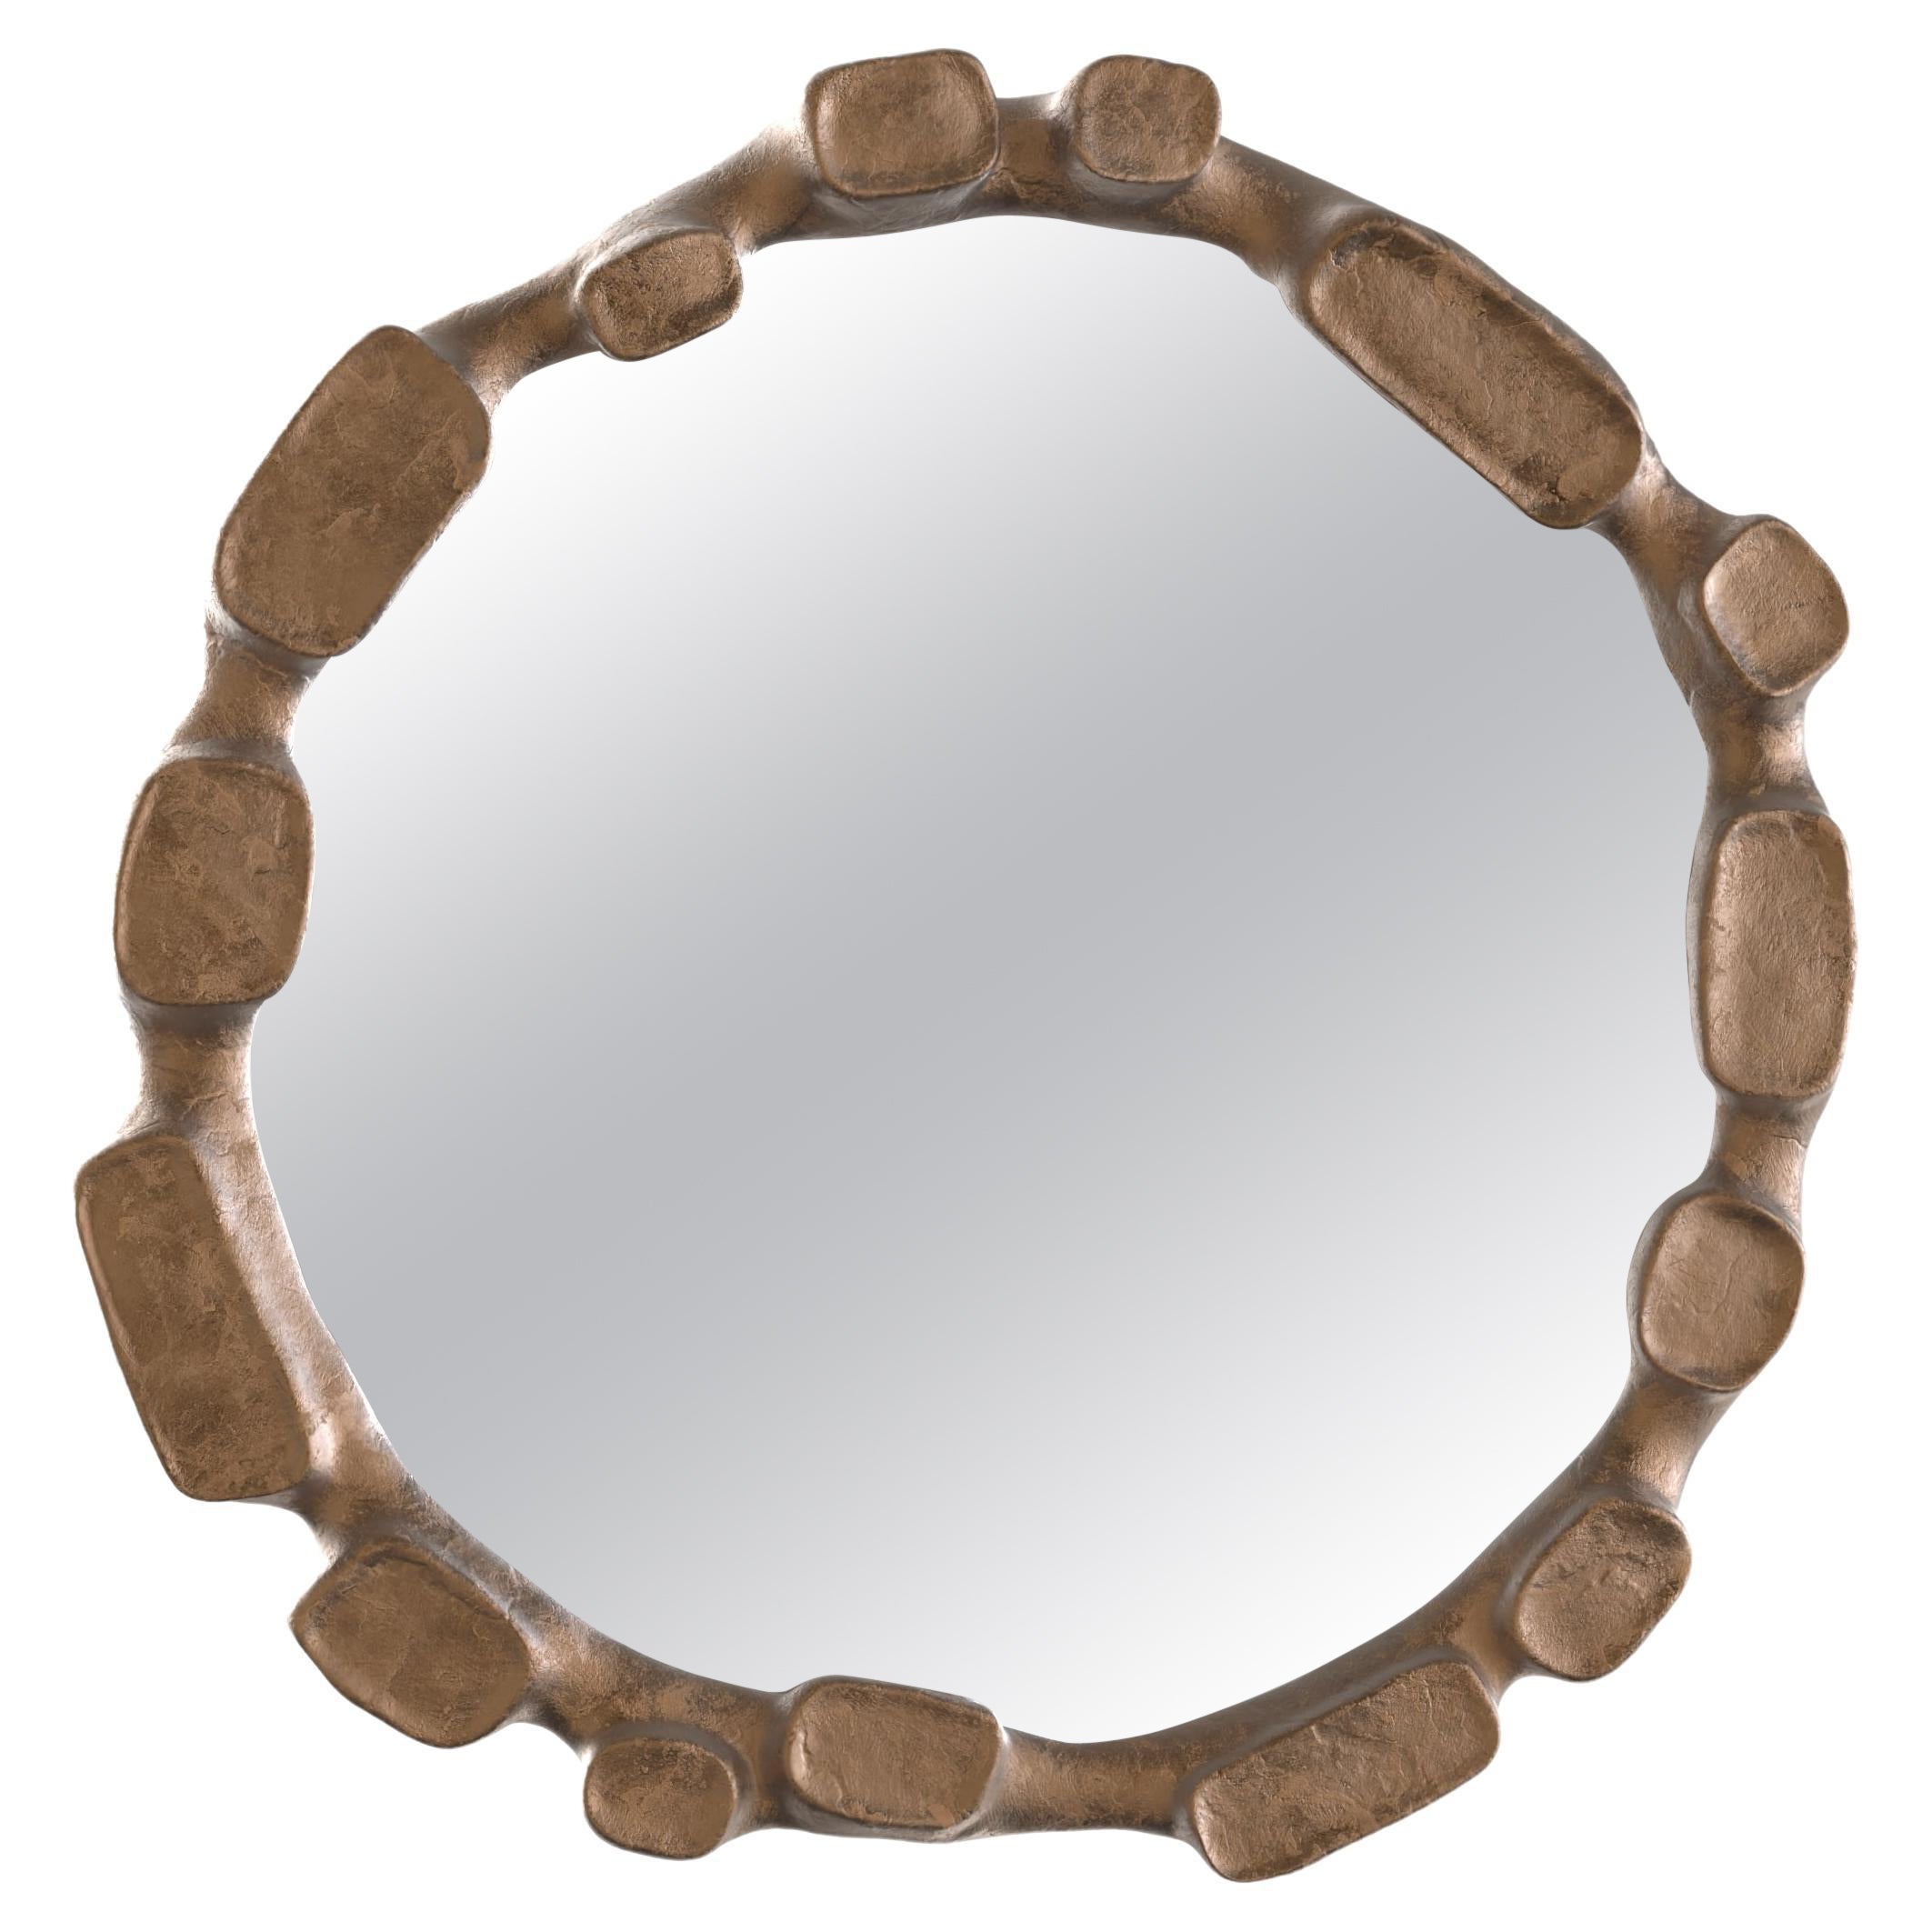 Contemporary Limited Edition Bronze Mirror, Mare V1 by Simone Fanciullacci